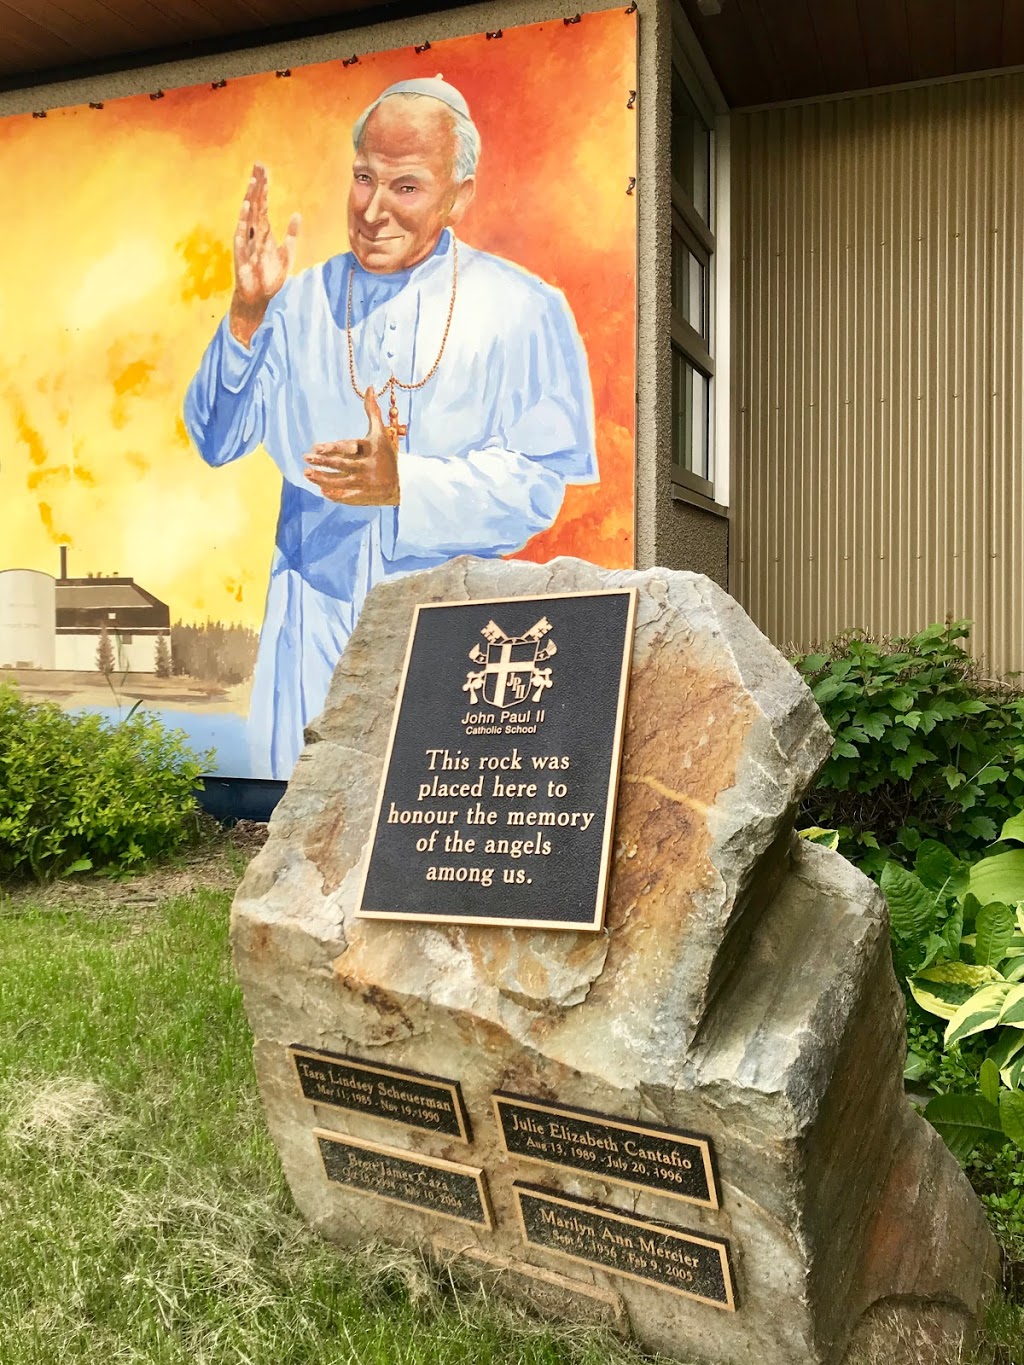 St. John Paul II Catholic School | school | 5801 48 St, Stony Plain, AB T7Z 2J9, Canada | 7809632526 OR +1 780-963-2526